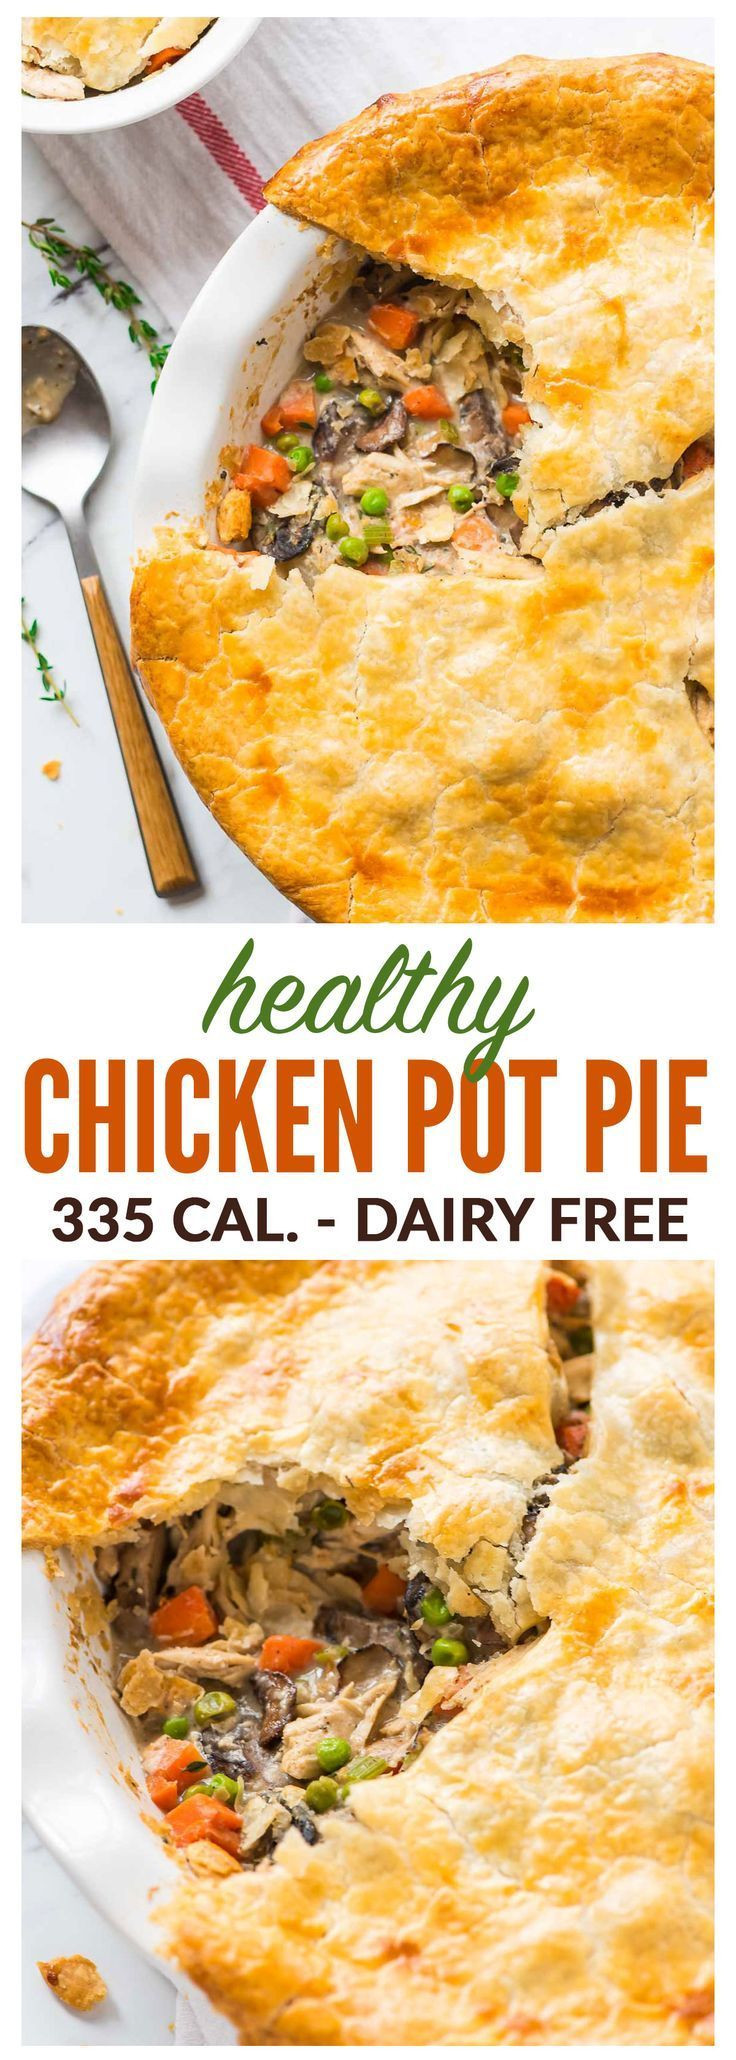 Is Chicken Pot Pie Healthy
 Healthy Eating Healthy Chicken Pot Pie Just 335